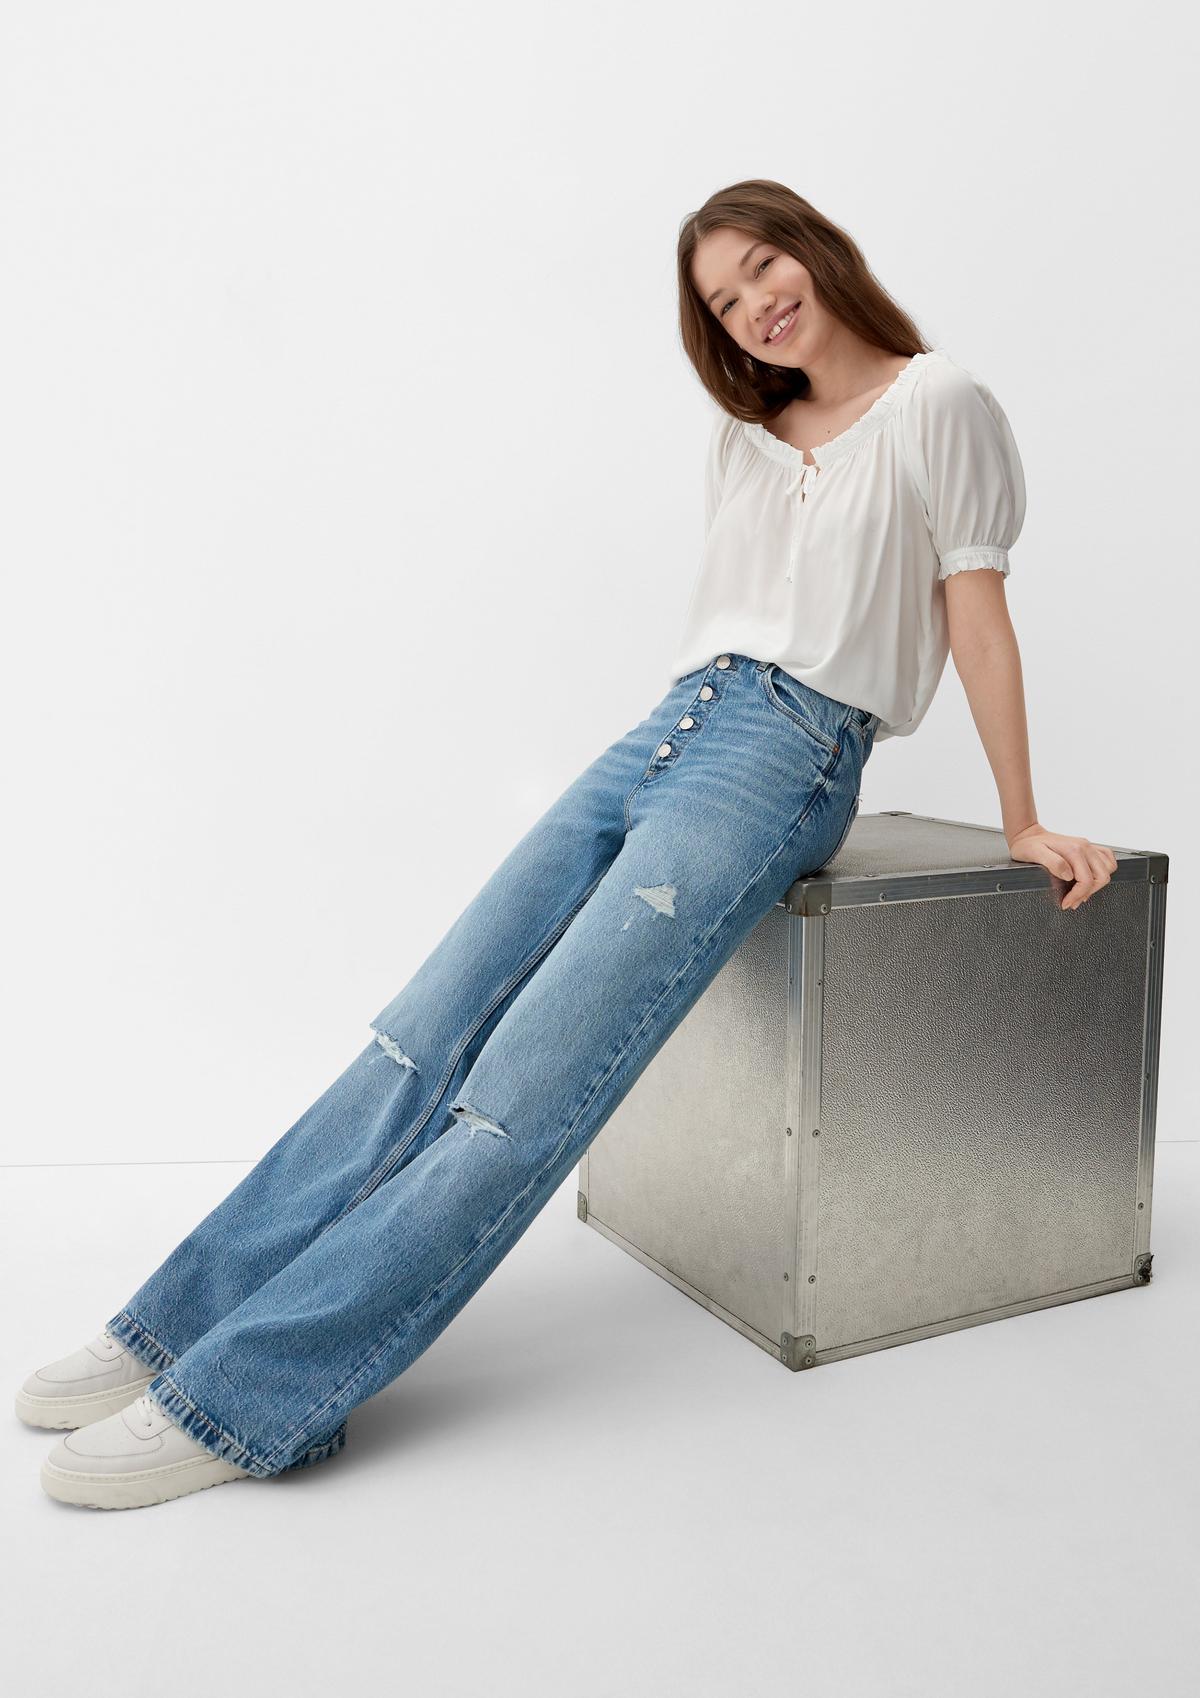 Regular: jeans hlače s širokimi hlačnicami